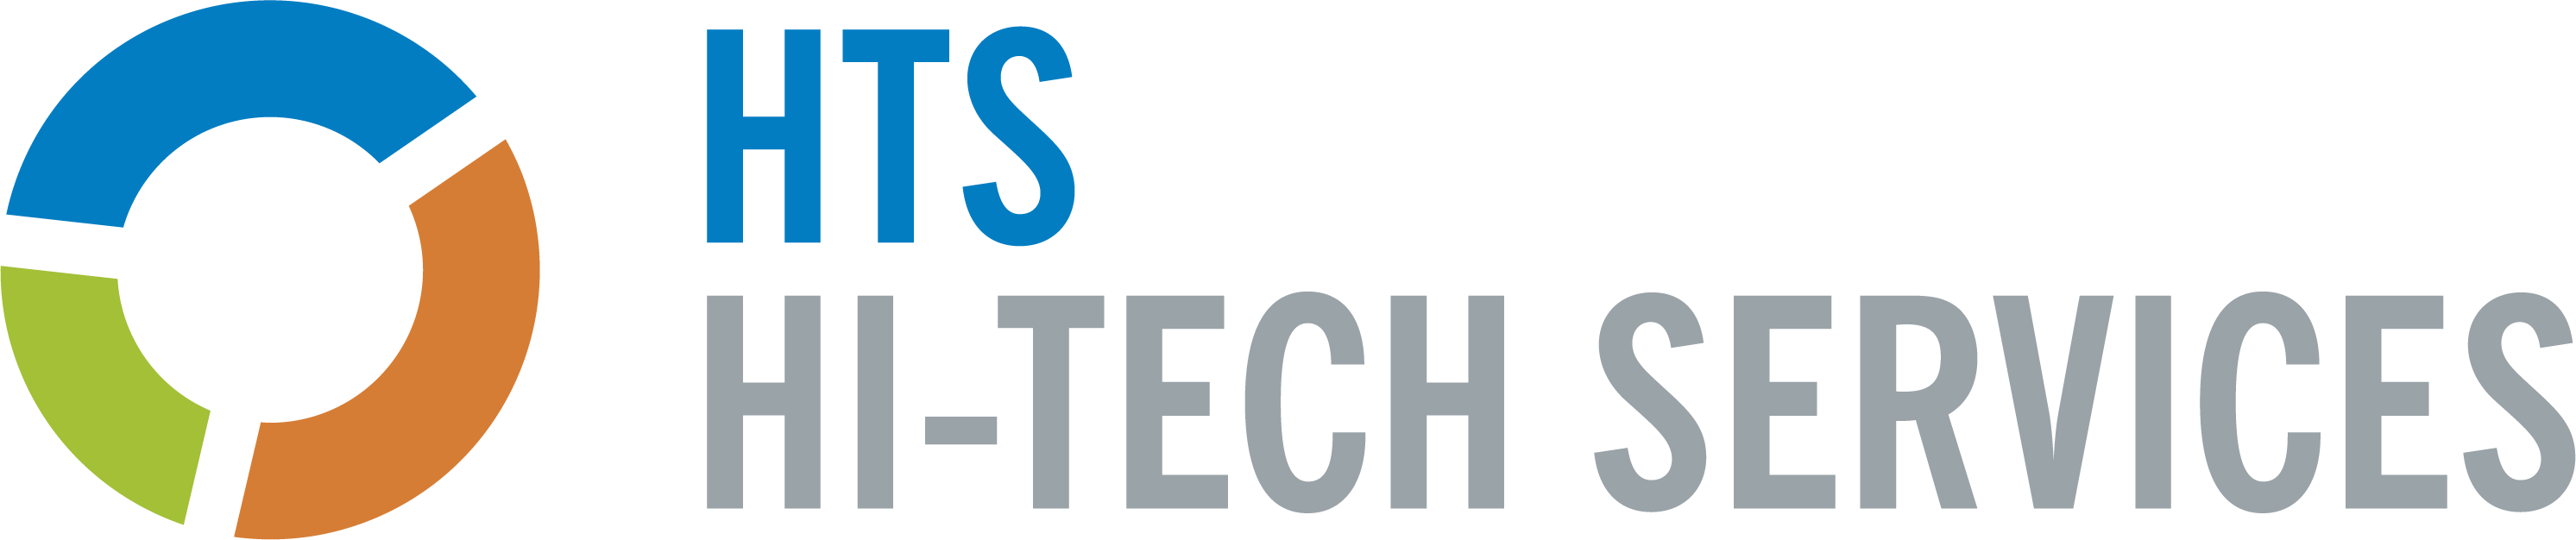 logo-hts-hi-tech-services.png